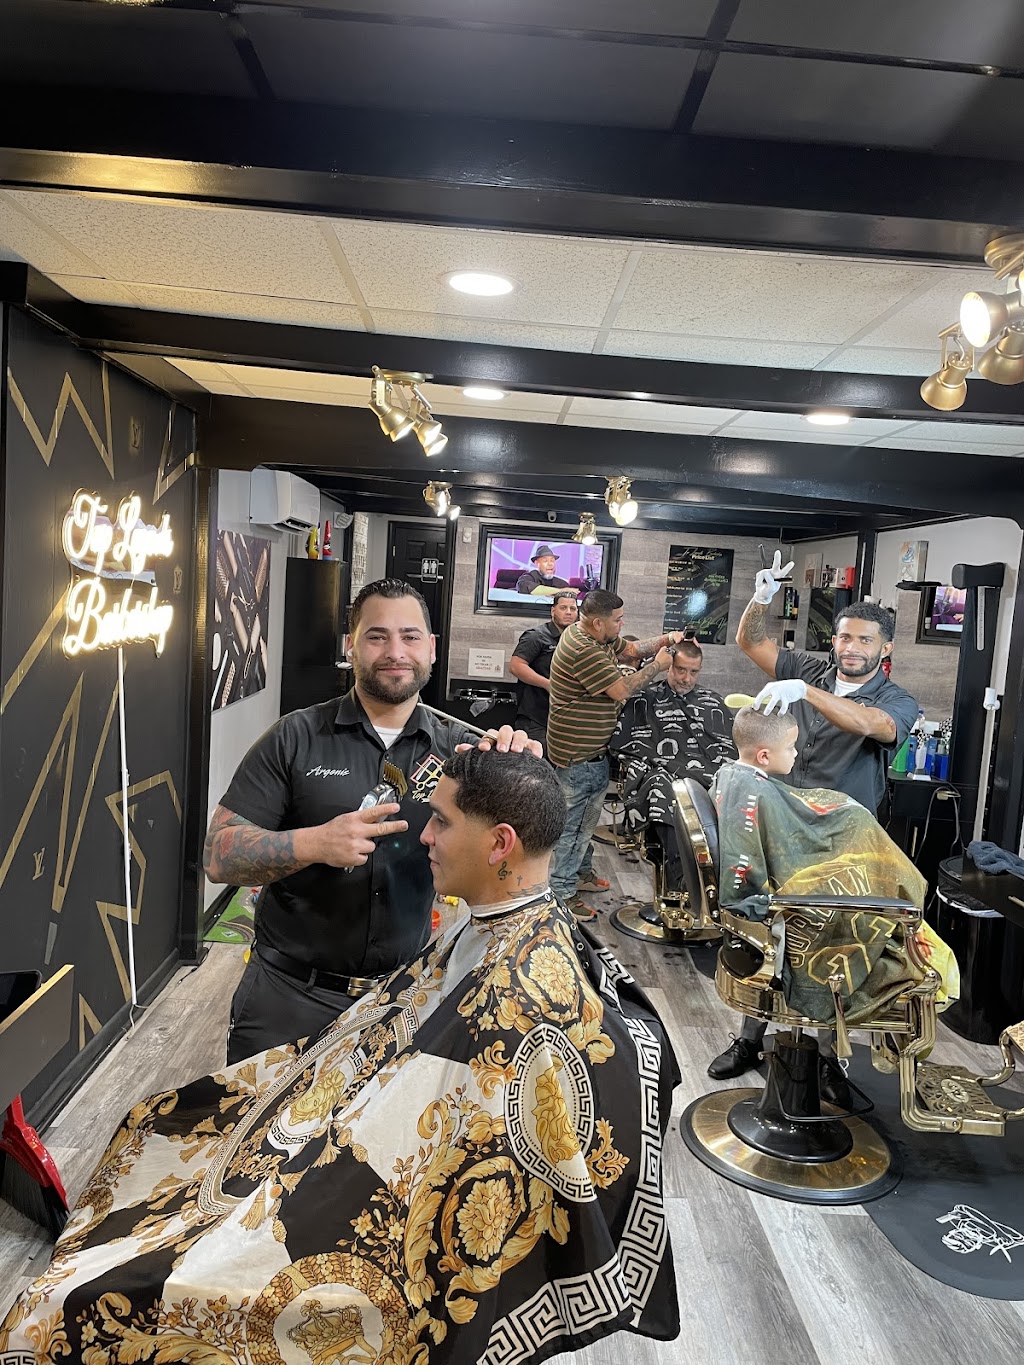 Top Legends Barbershop | 178 Center St, Chicopee, MA 01013 | Phone: (413) 419-6160